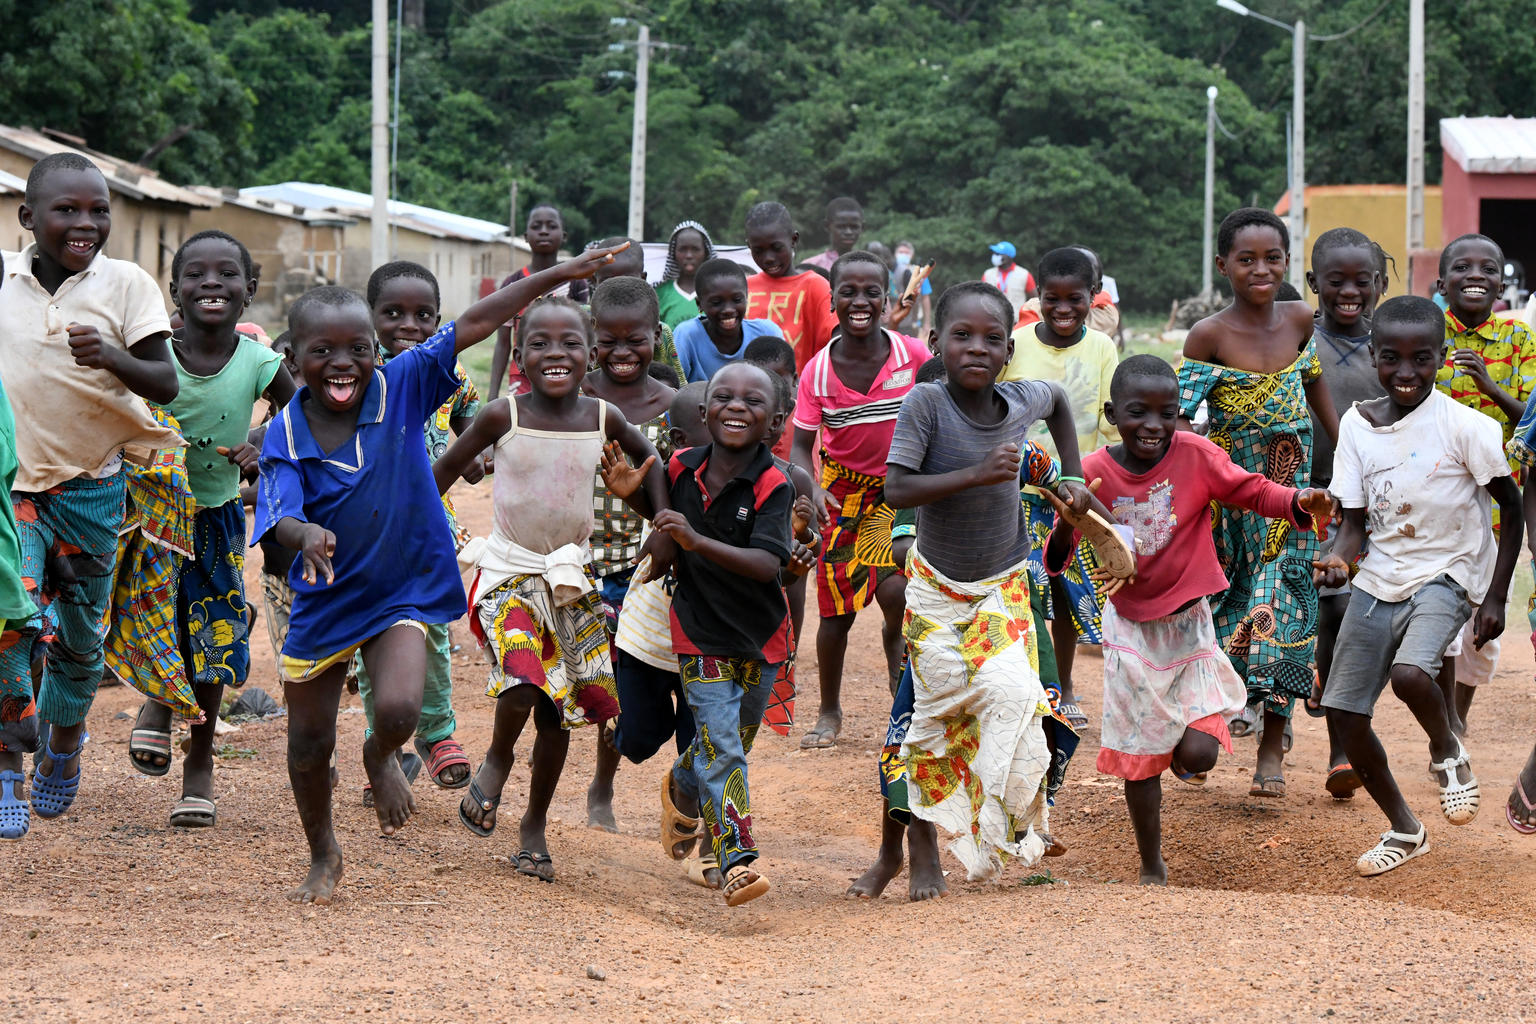 Smiling children in the village of Kpatrakaha